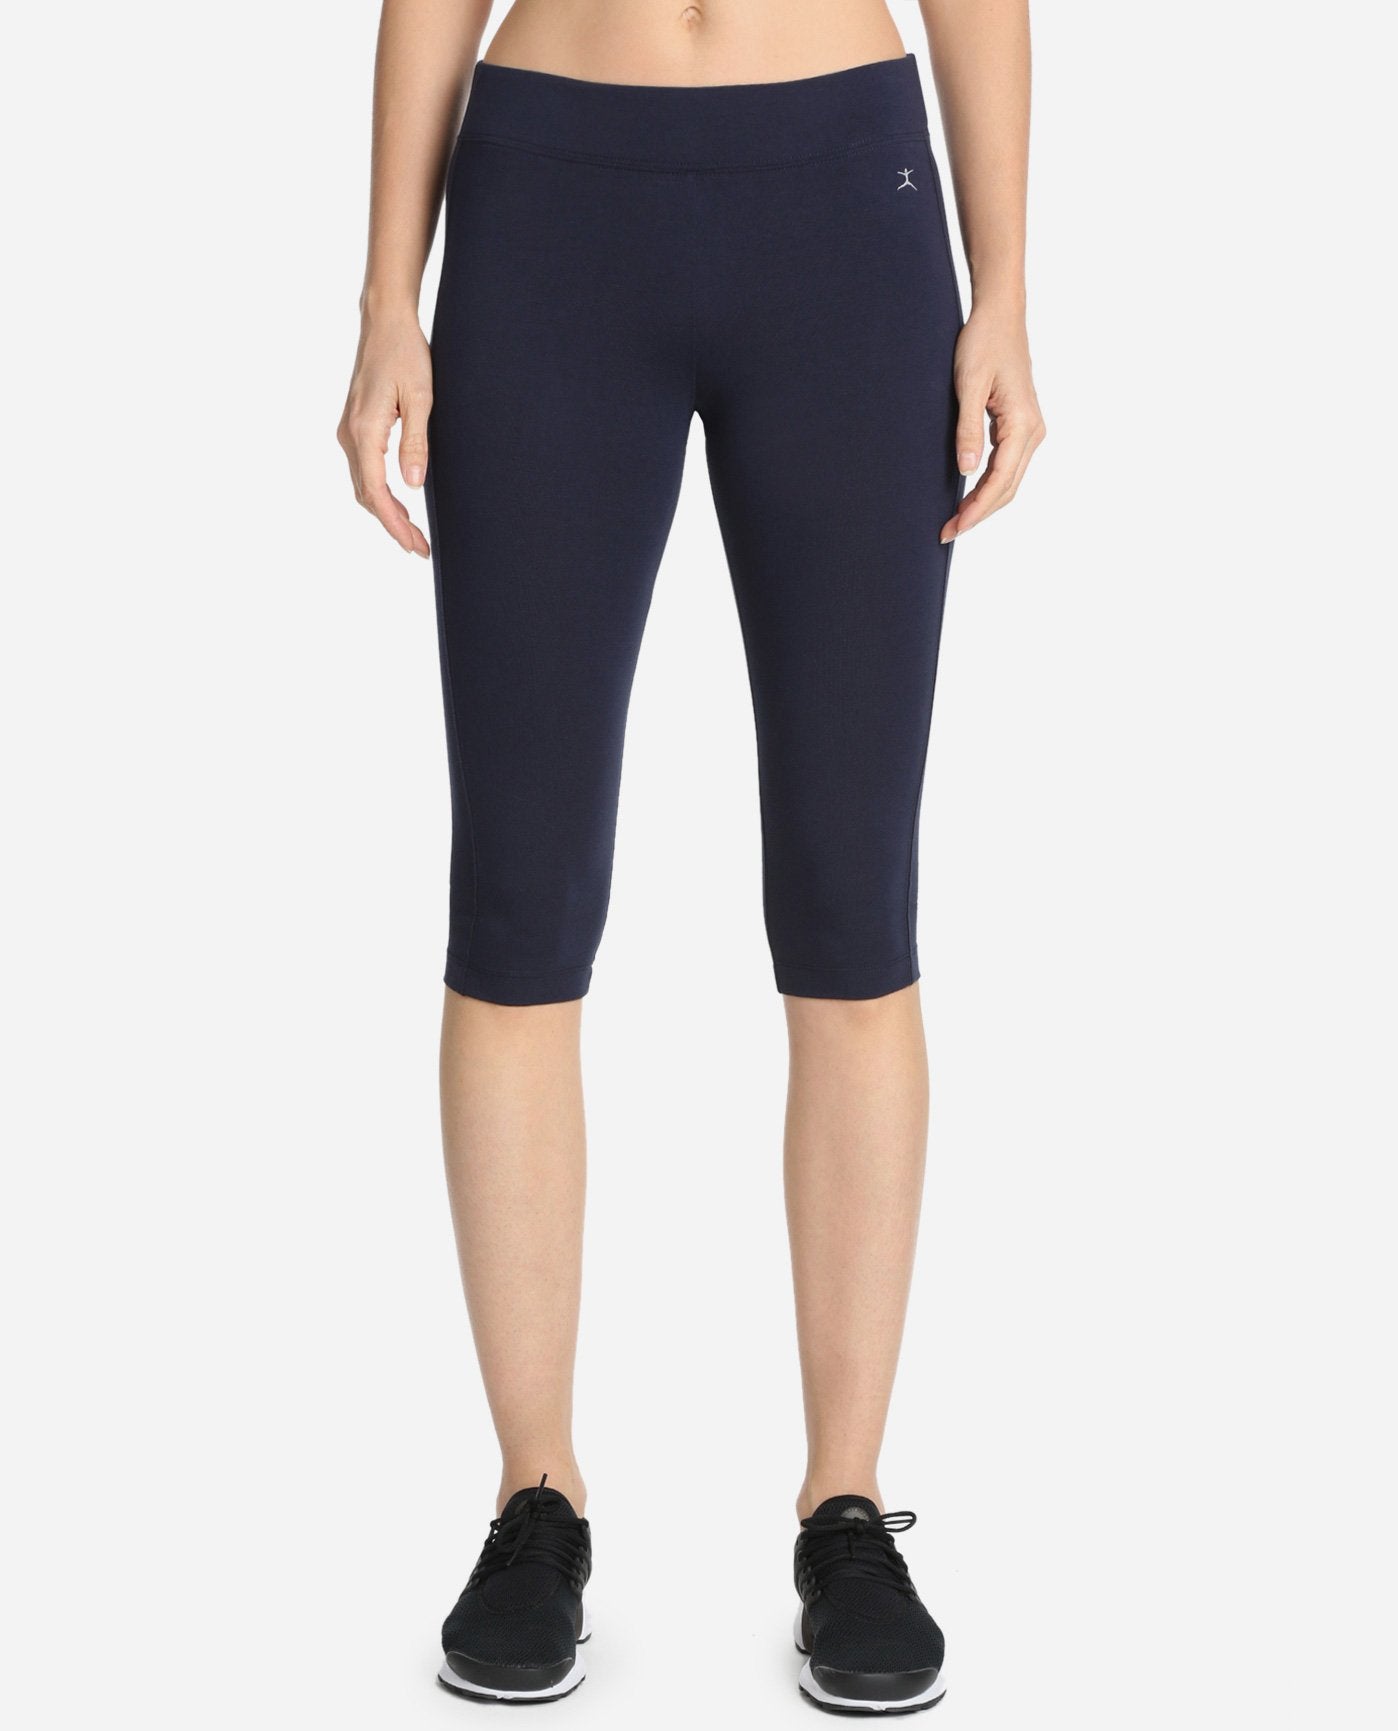 Danskin Now Poly Print Capri - Walmart.com  Athletic fashion, Pants for  women, Fitness fashion